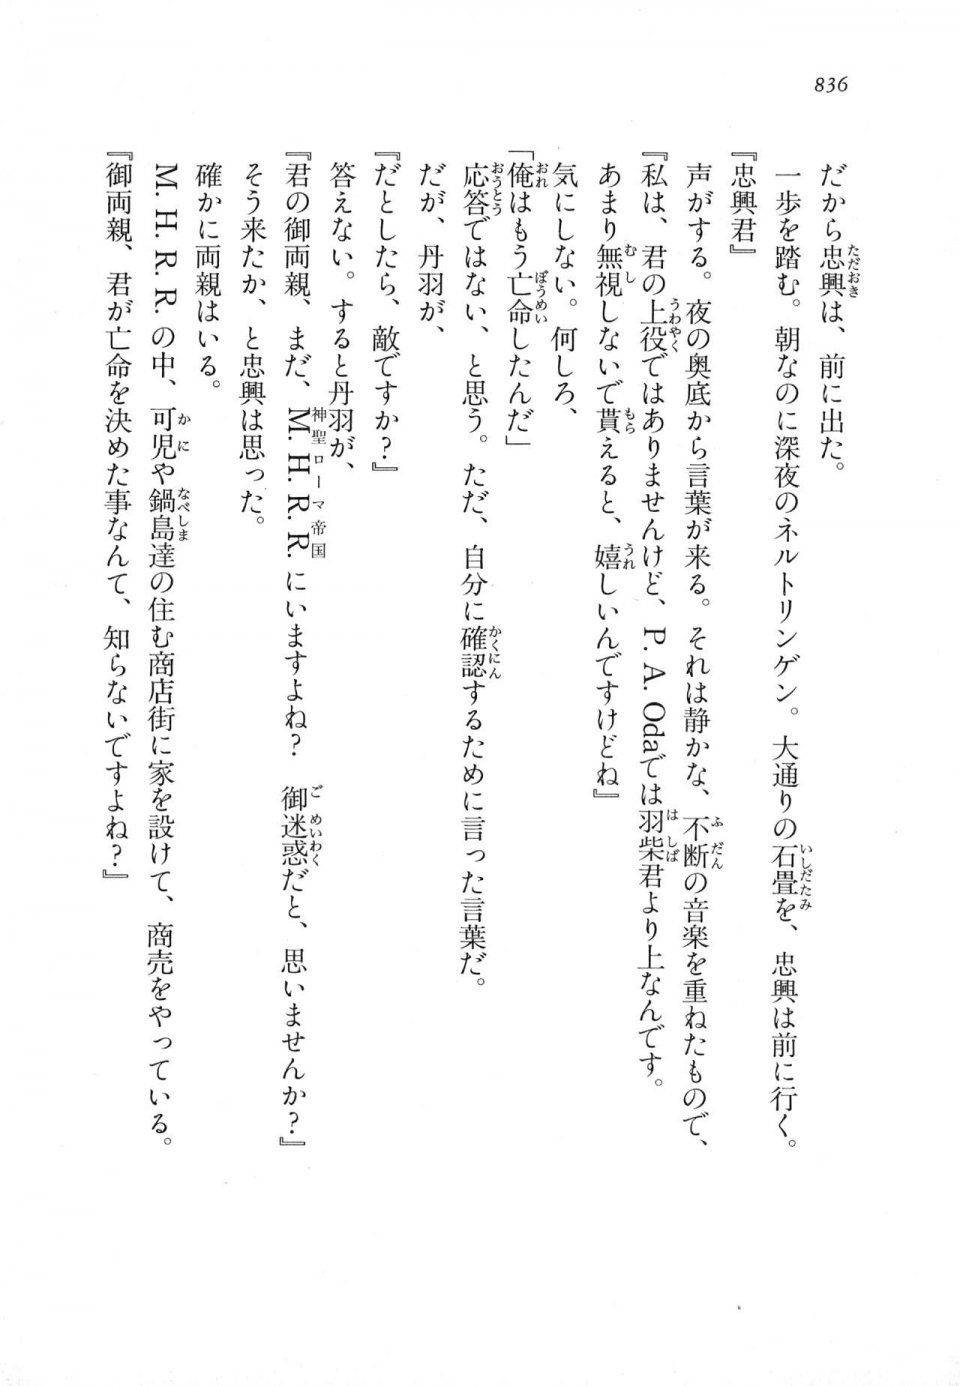 Kyoukai Senjou no Horizon LN Vol 18(7C) Part 2 - Photo #276